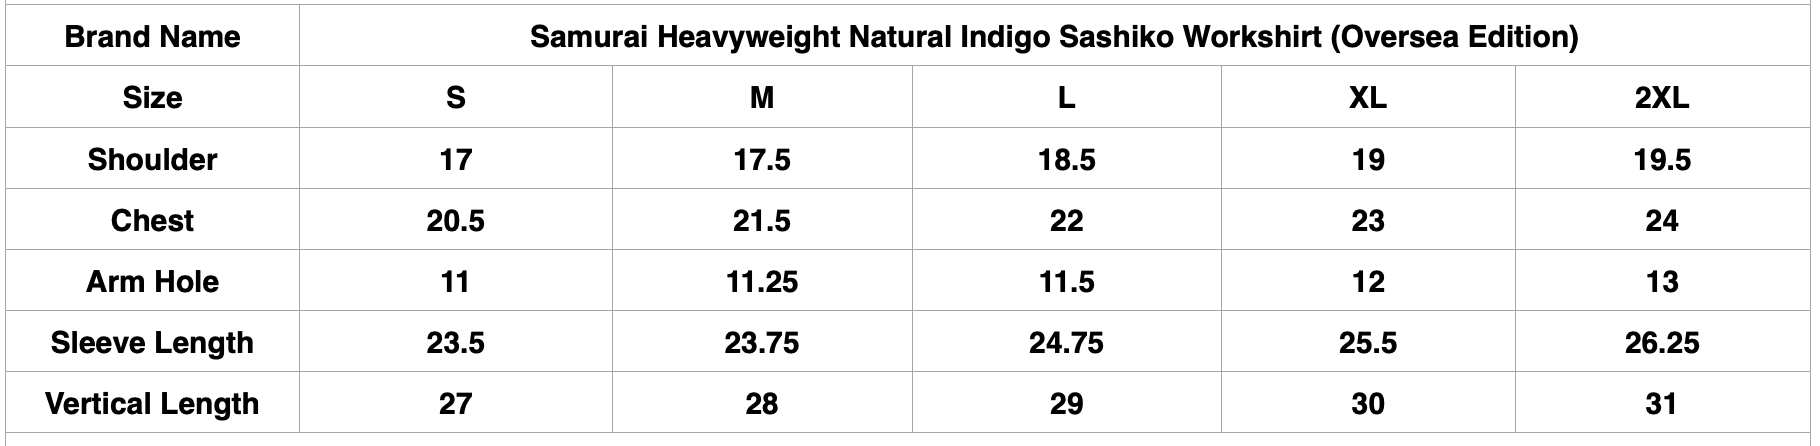 Samurai Heavyweight Natural Indigo Sashiko Workshirt (Overseas Edition)